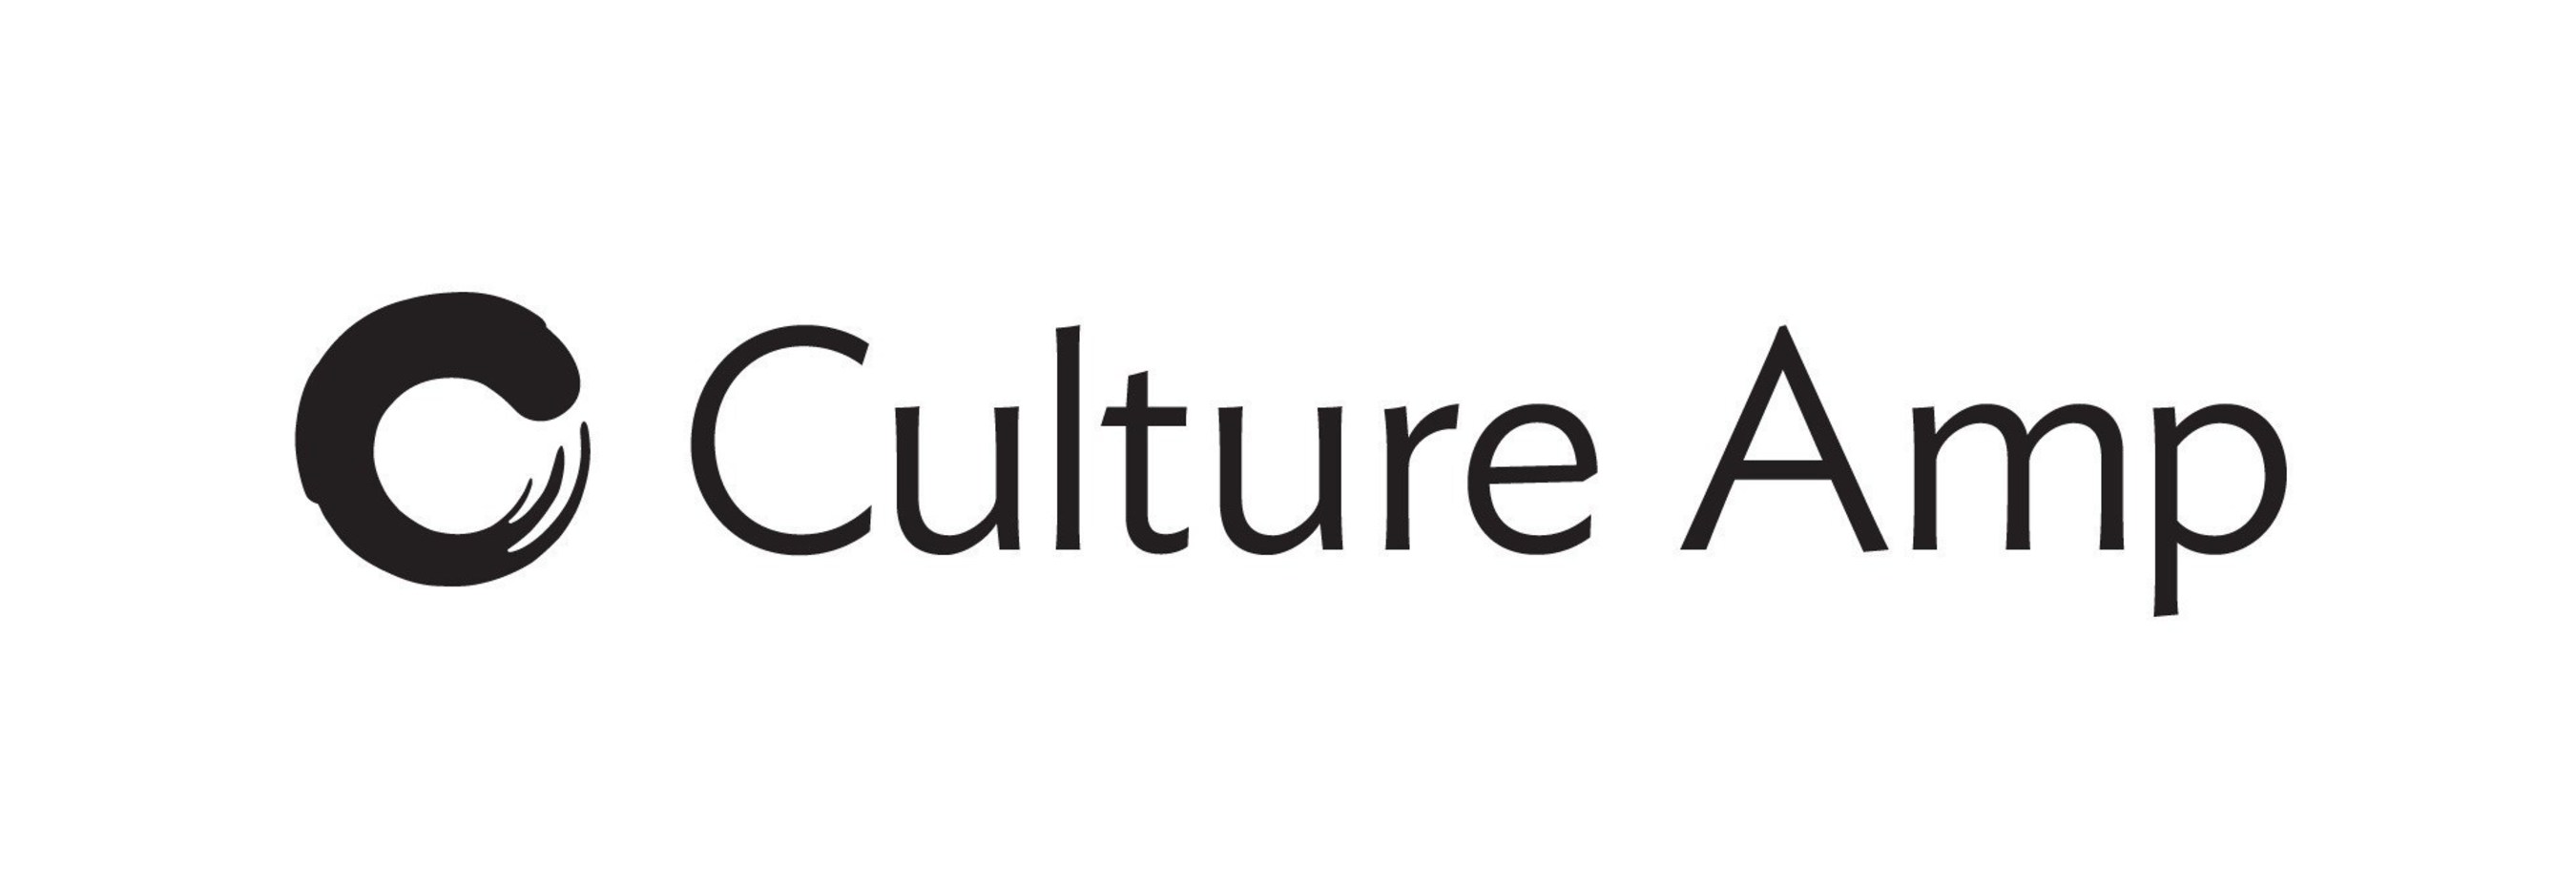 Culture Amp logo.